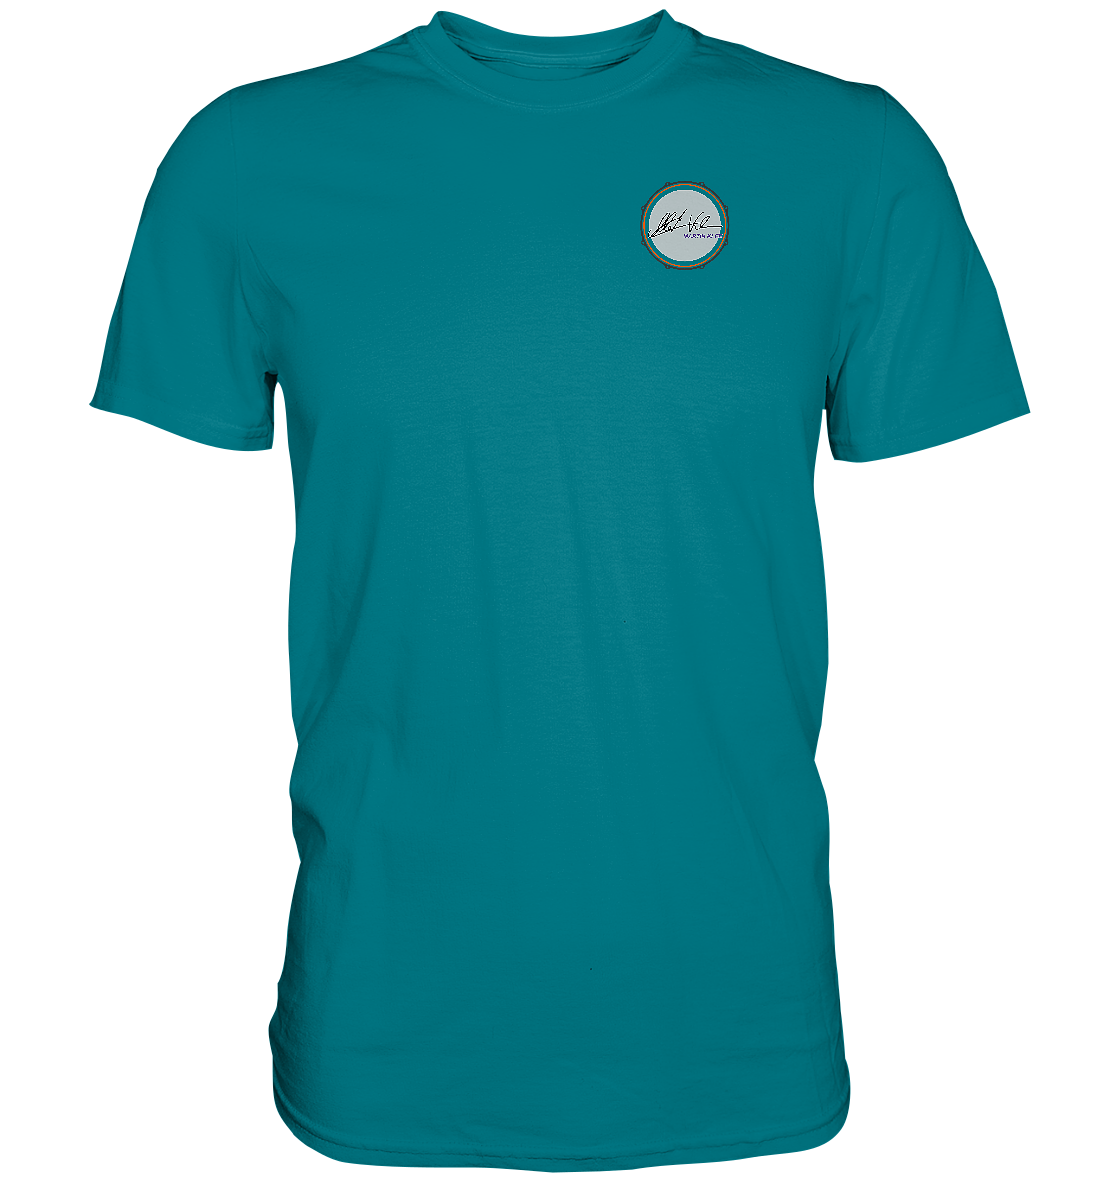 founder - unisex shirt | various colors